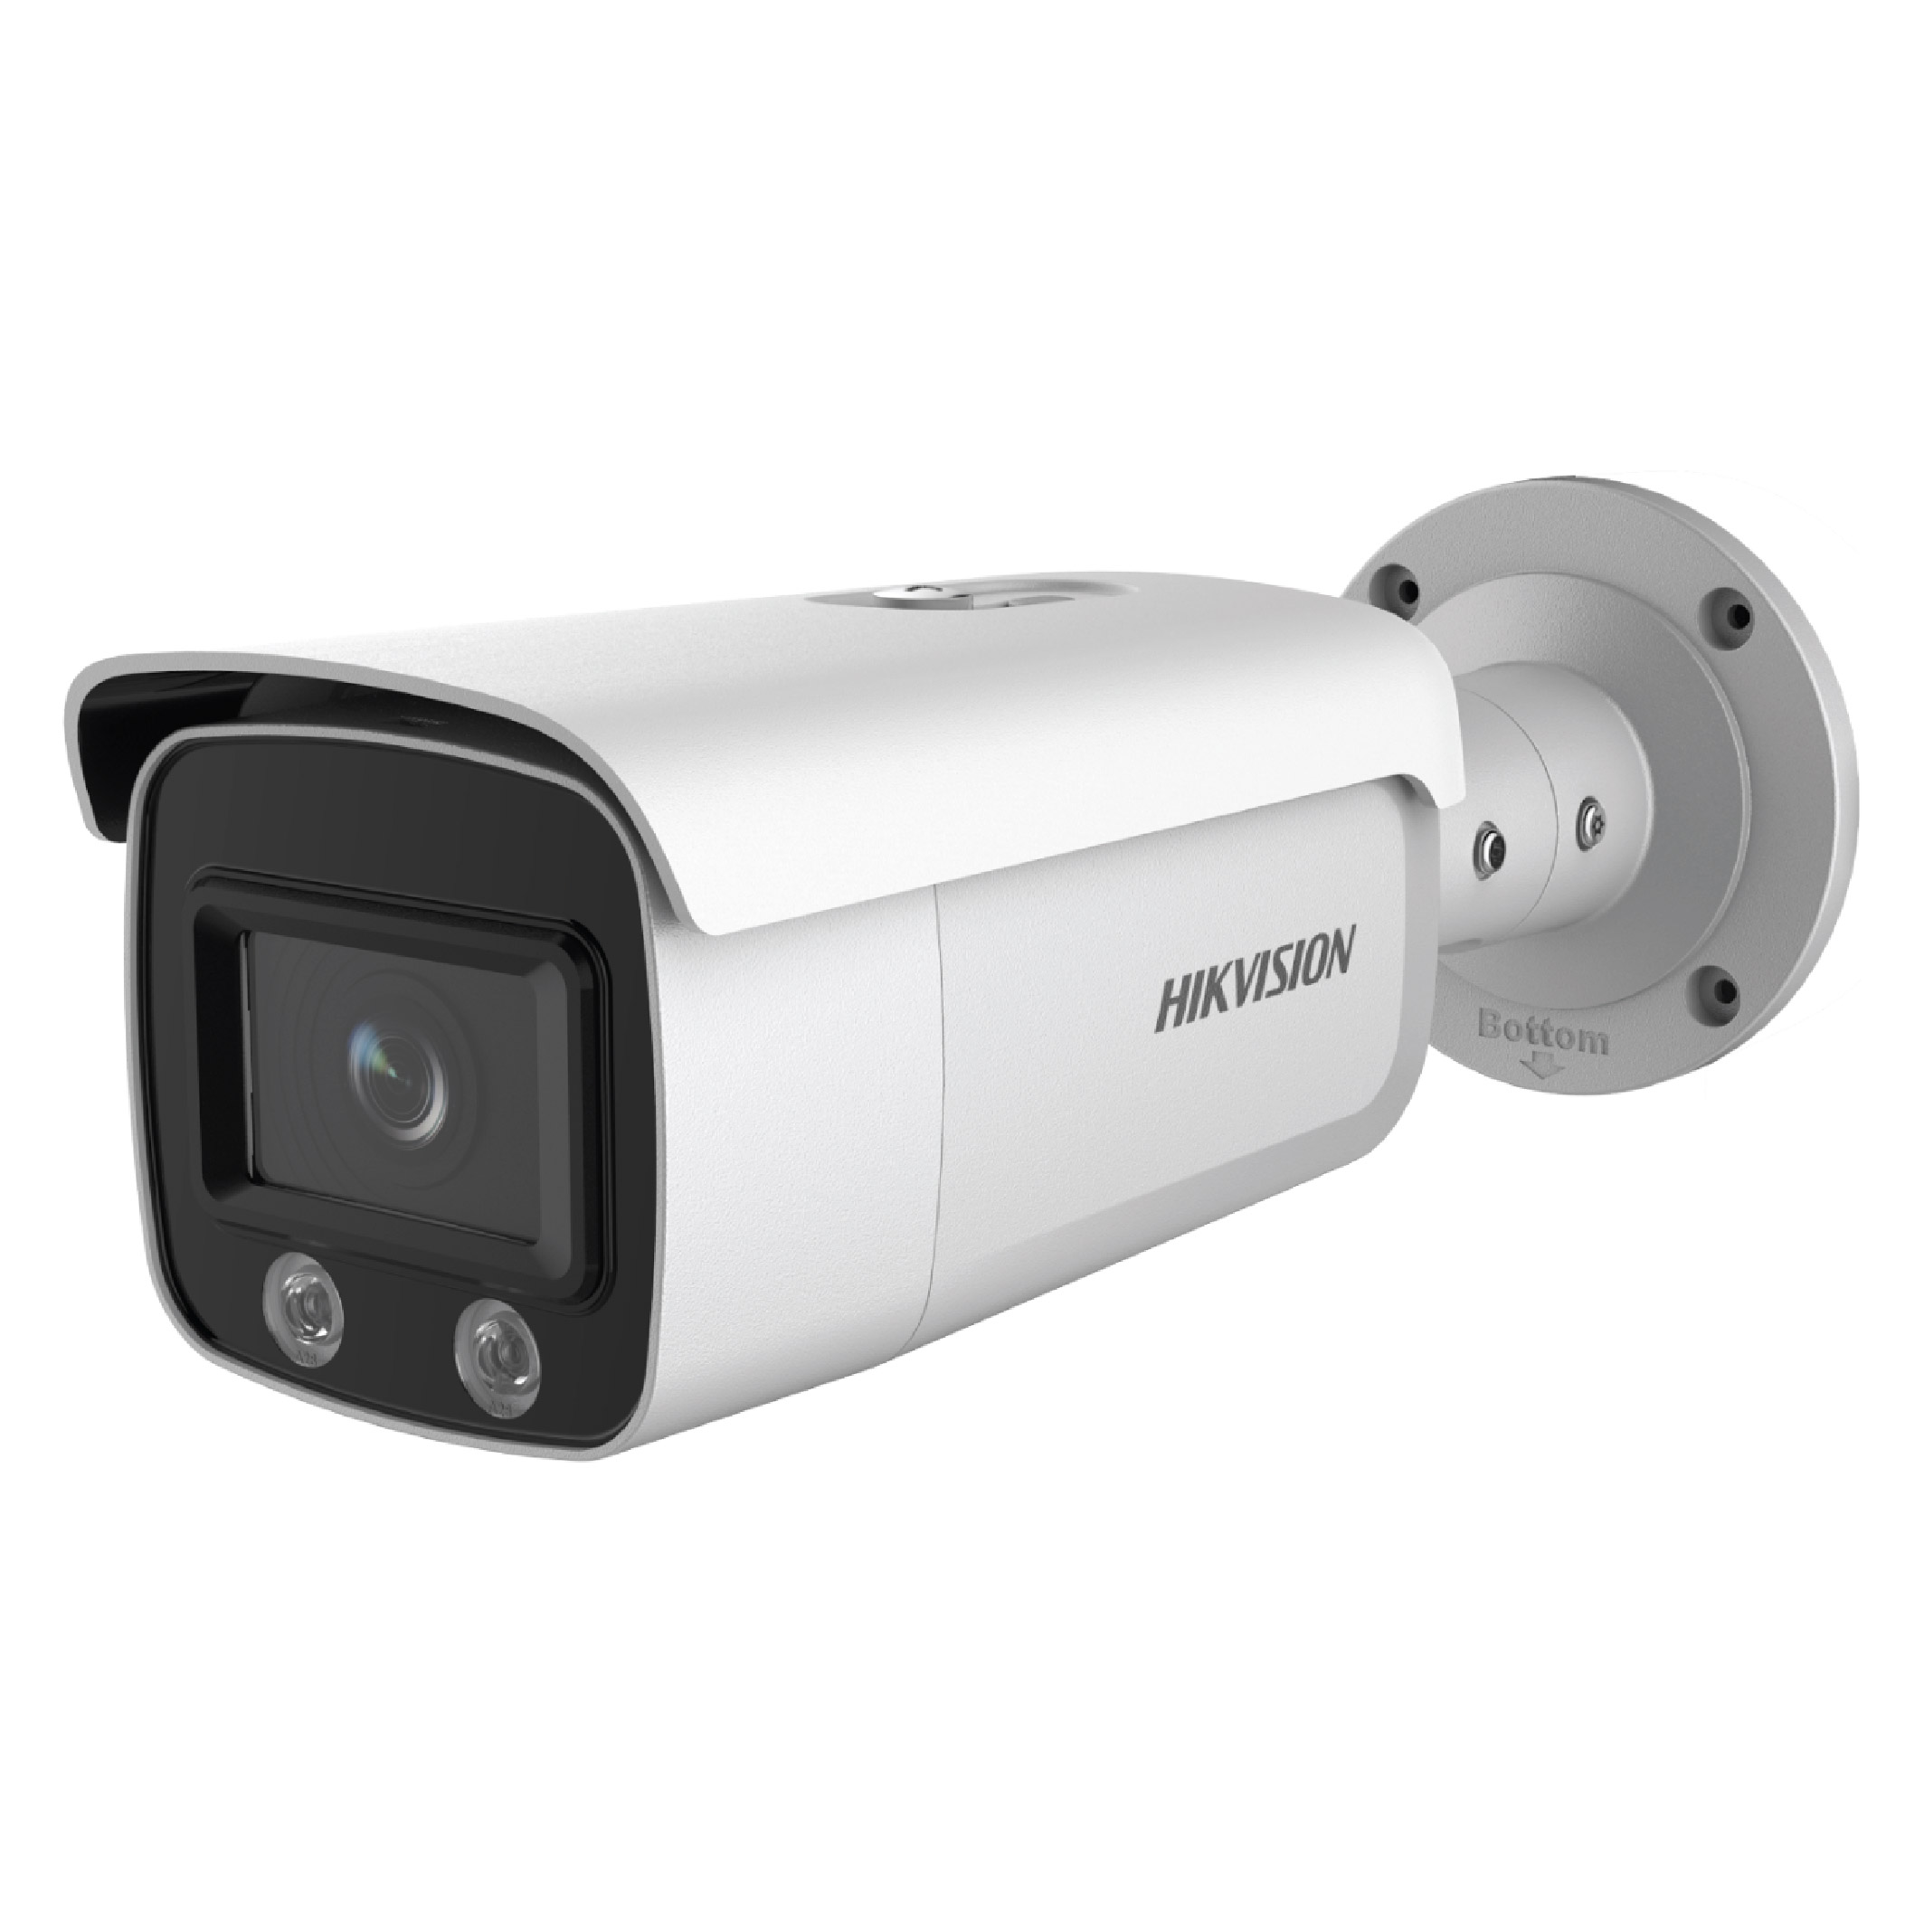 HIKVISION DS-2CD2T47G1-L Turbo HD Camera